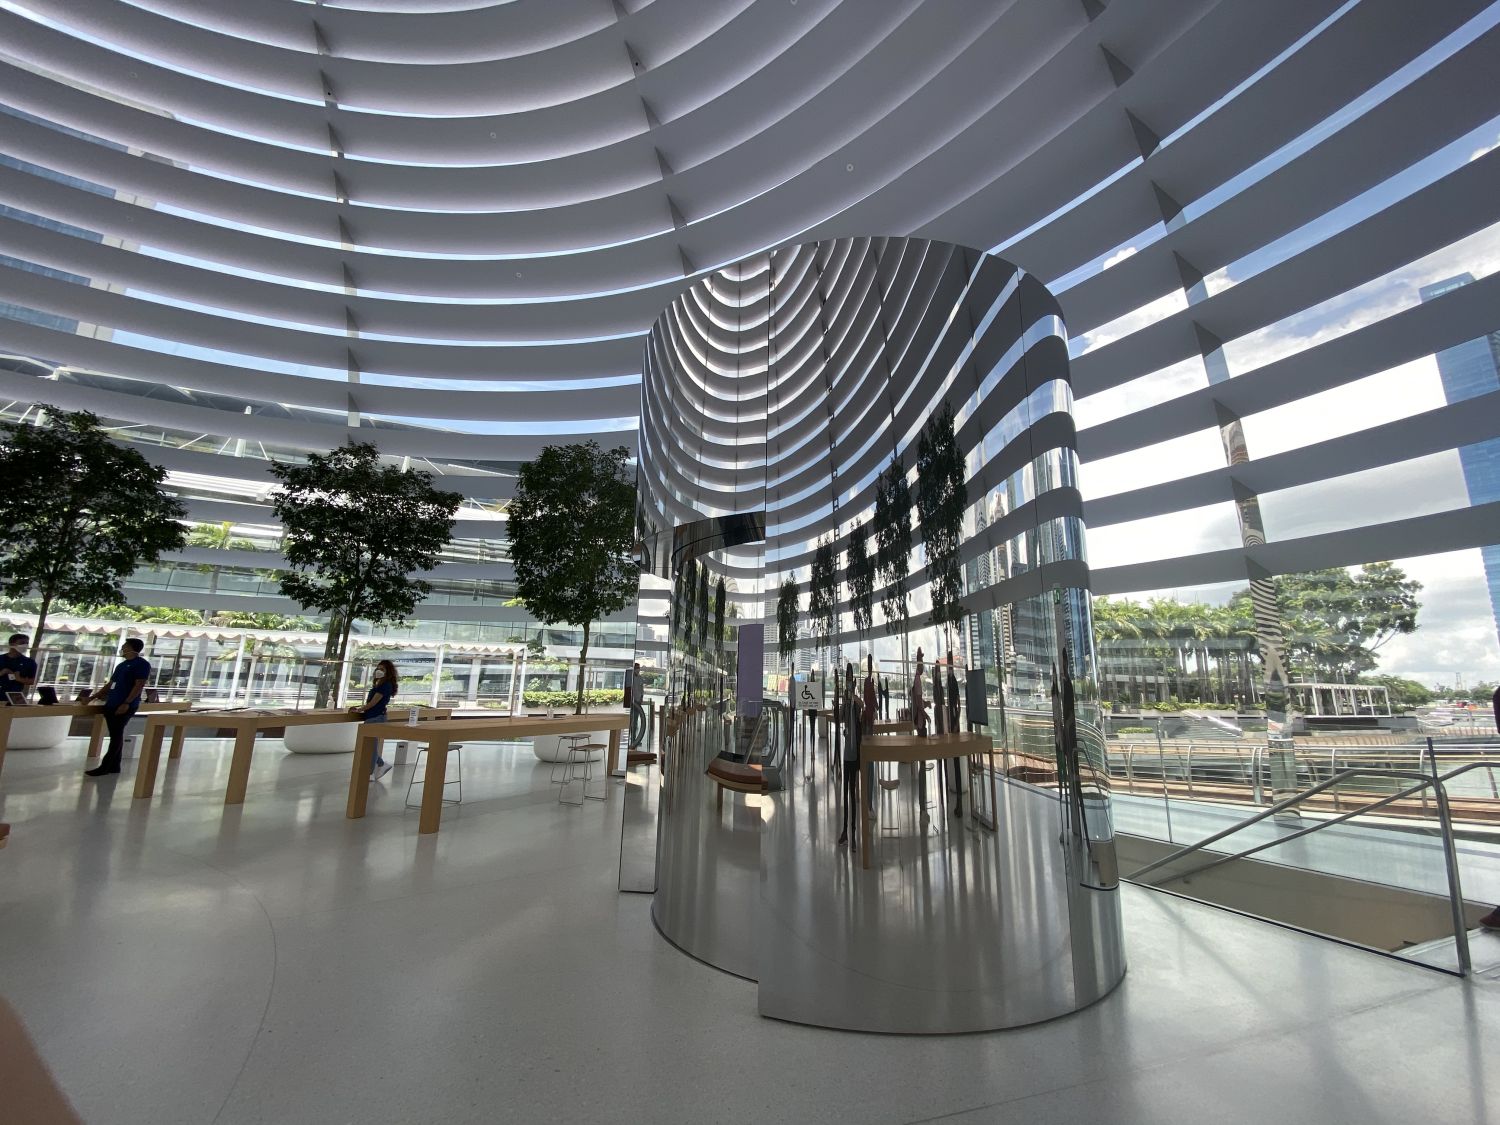 Inside Apple's Singapore Marina Bay Sands retail store